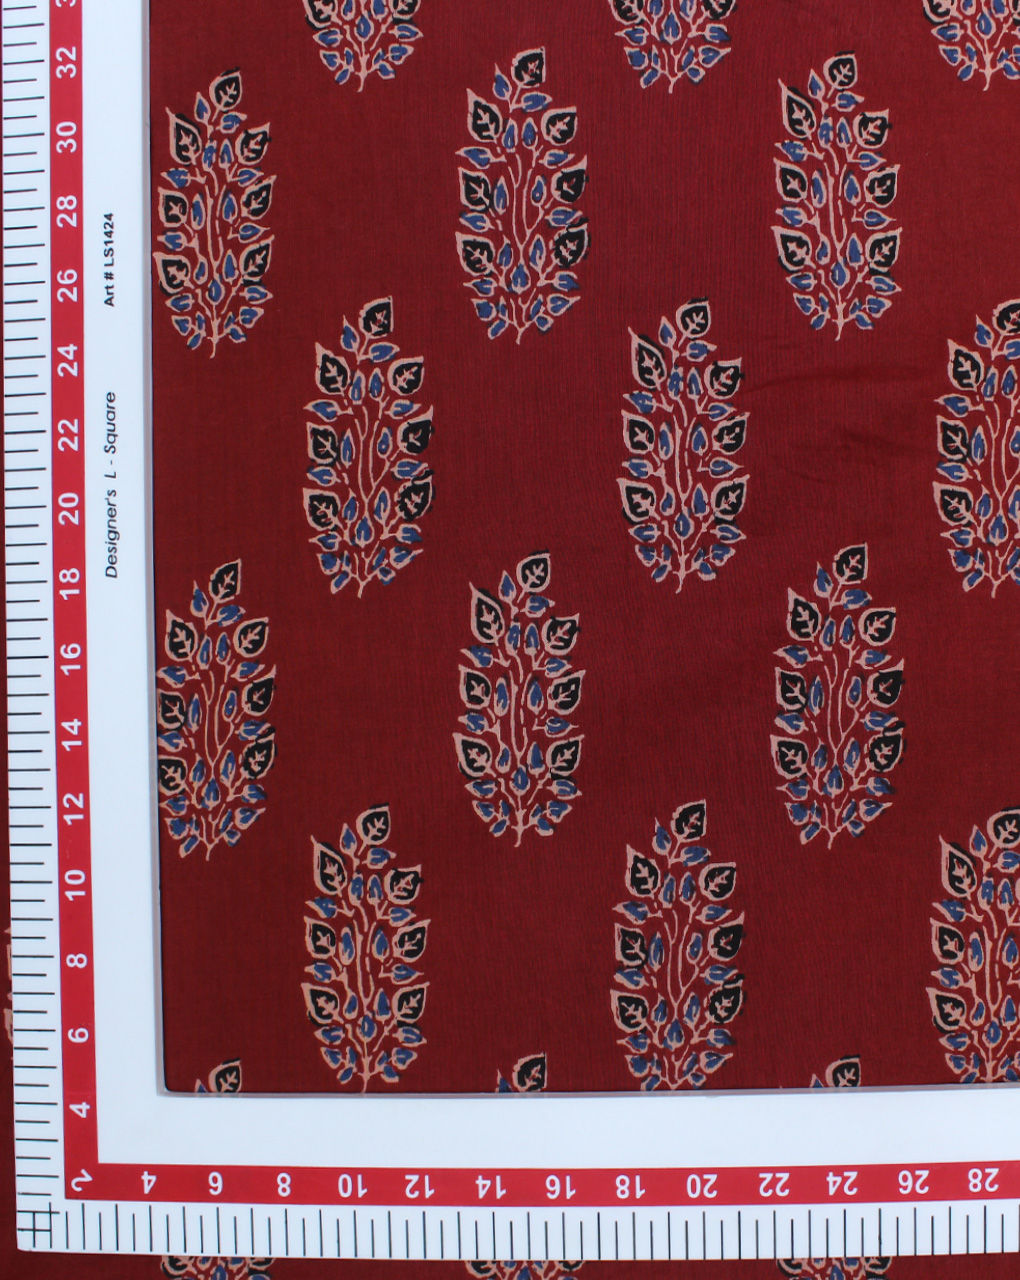 Maroon Leaf Design Printed Cotton Fabric